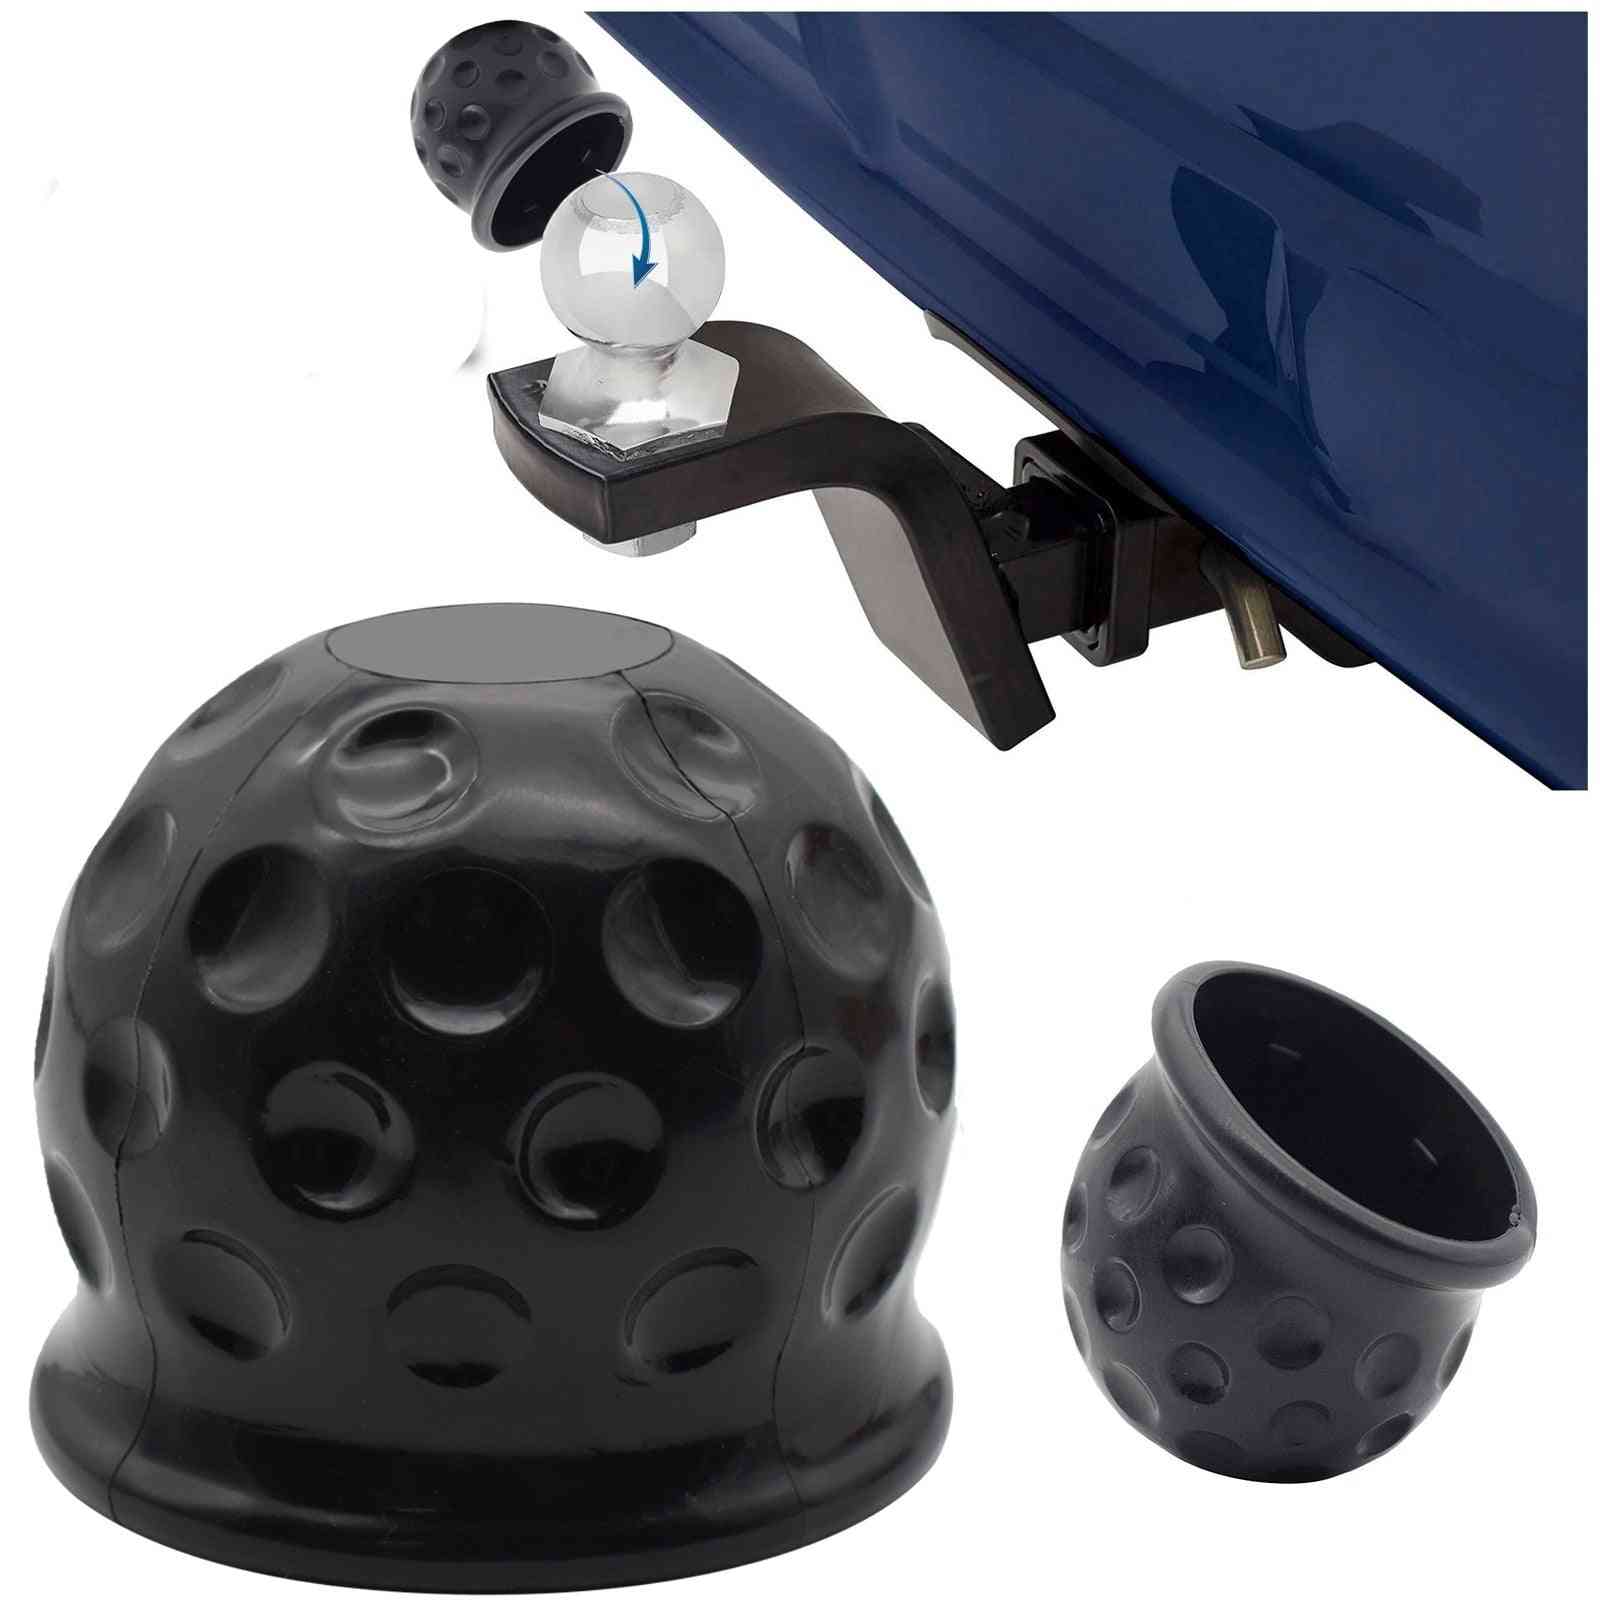 Universal 50mm Tow Bar Ball Cover Cap Rubber Ball Hood Trailer Hitch Protect Towball Trailer Ball Cover Black Car Accessories